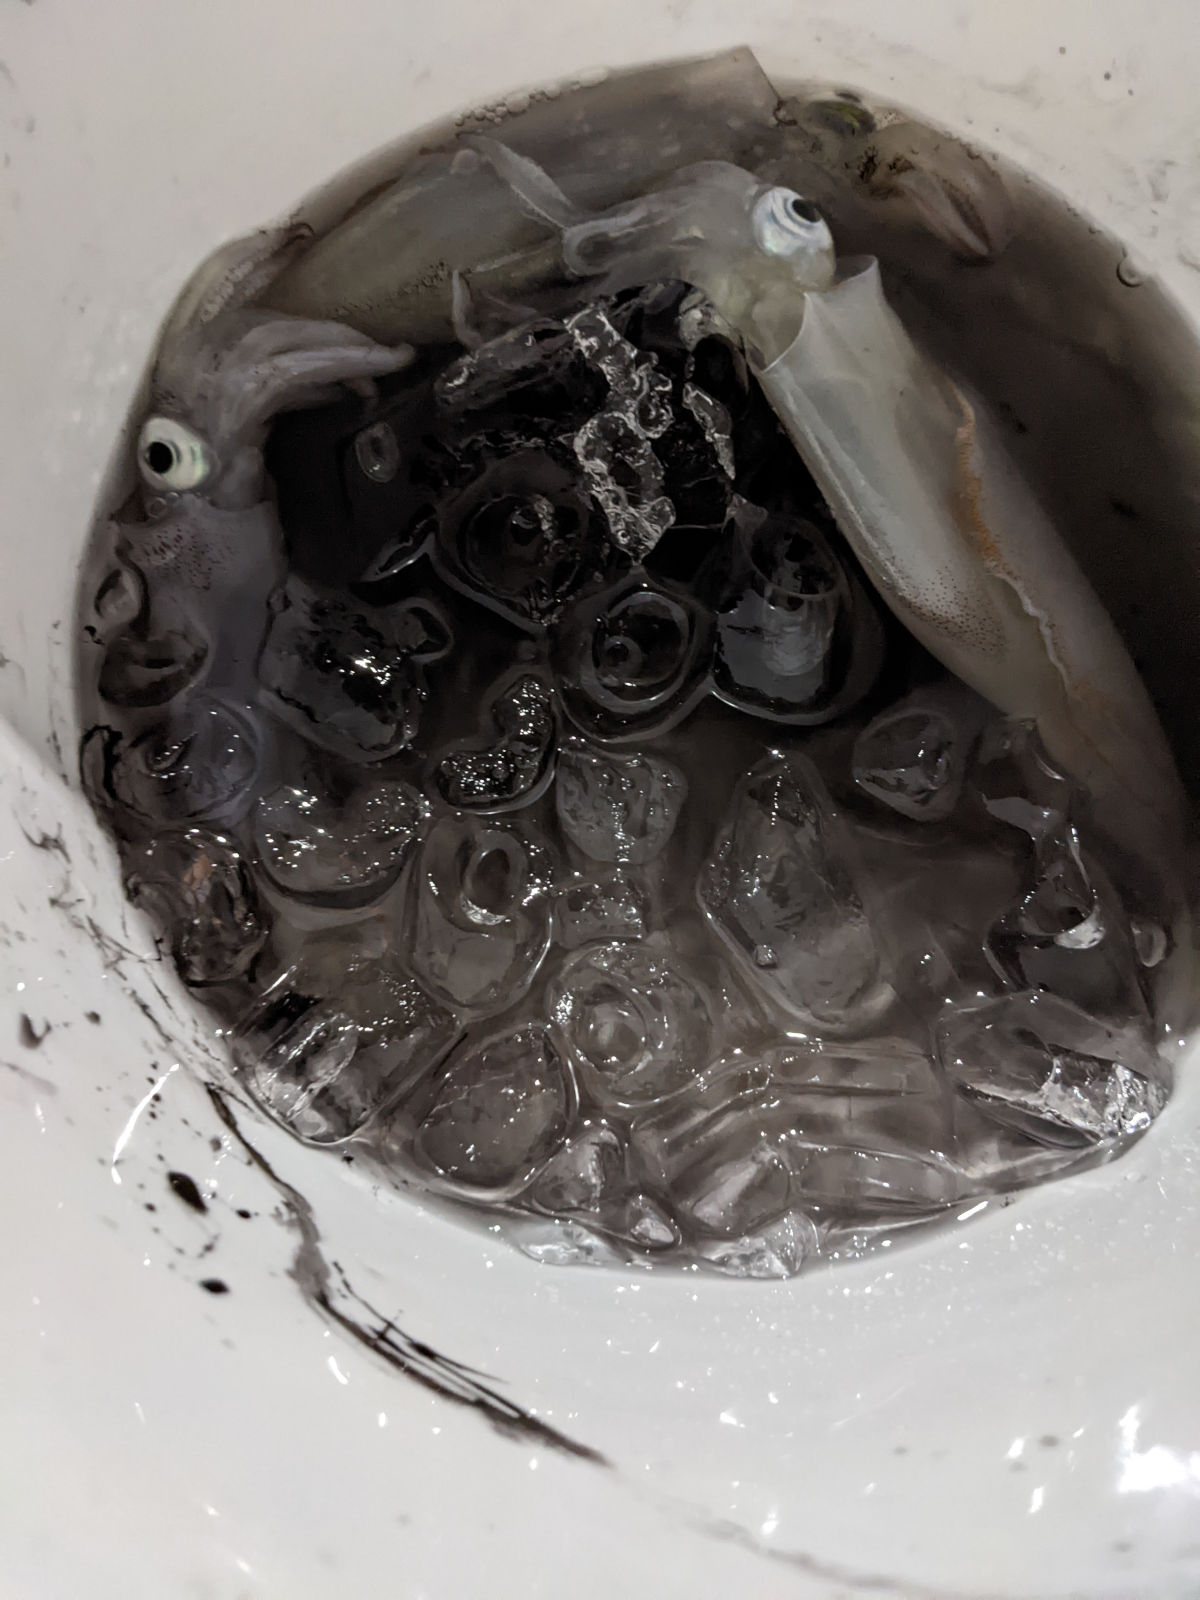 Three caught squid in my bucket